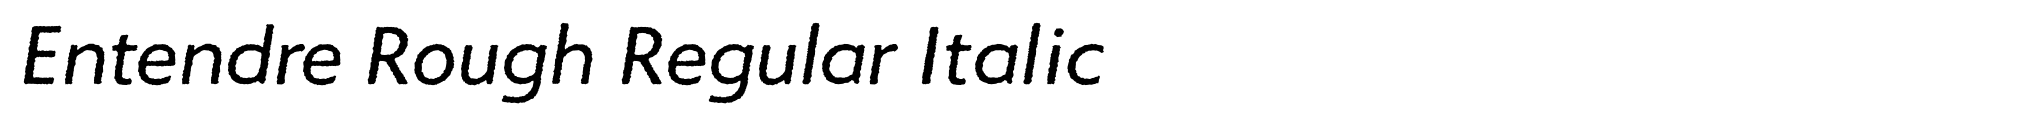 Entendre Rough Regular Italic image